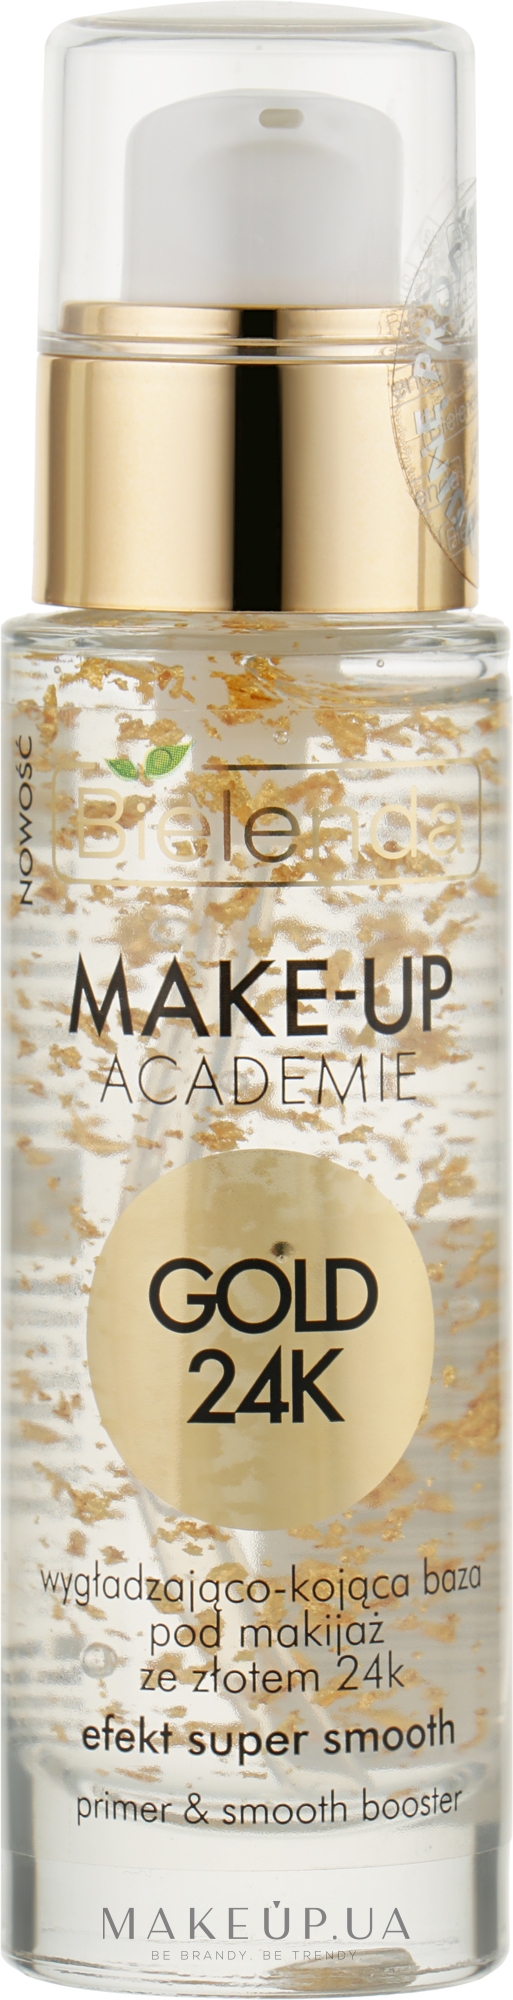 База под макияж, золотая - Bielenda Make-Up Academie Gold 24K Primer & Smooth Booster — фото 30g